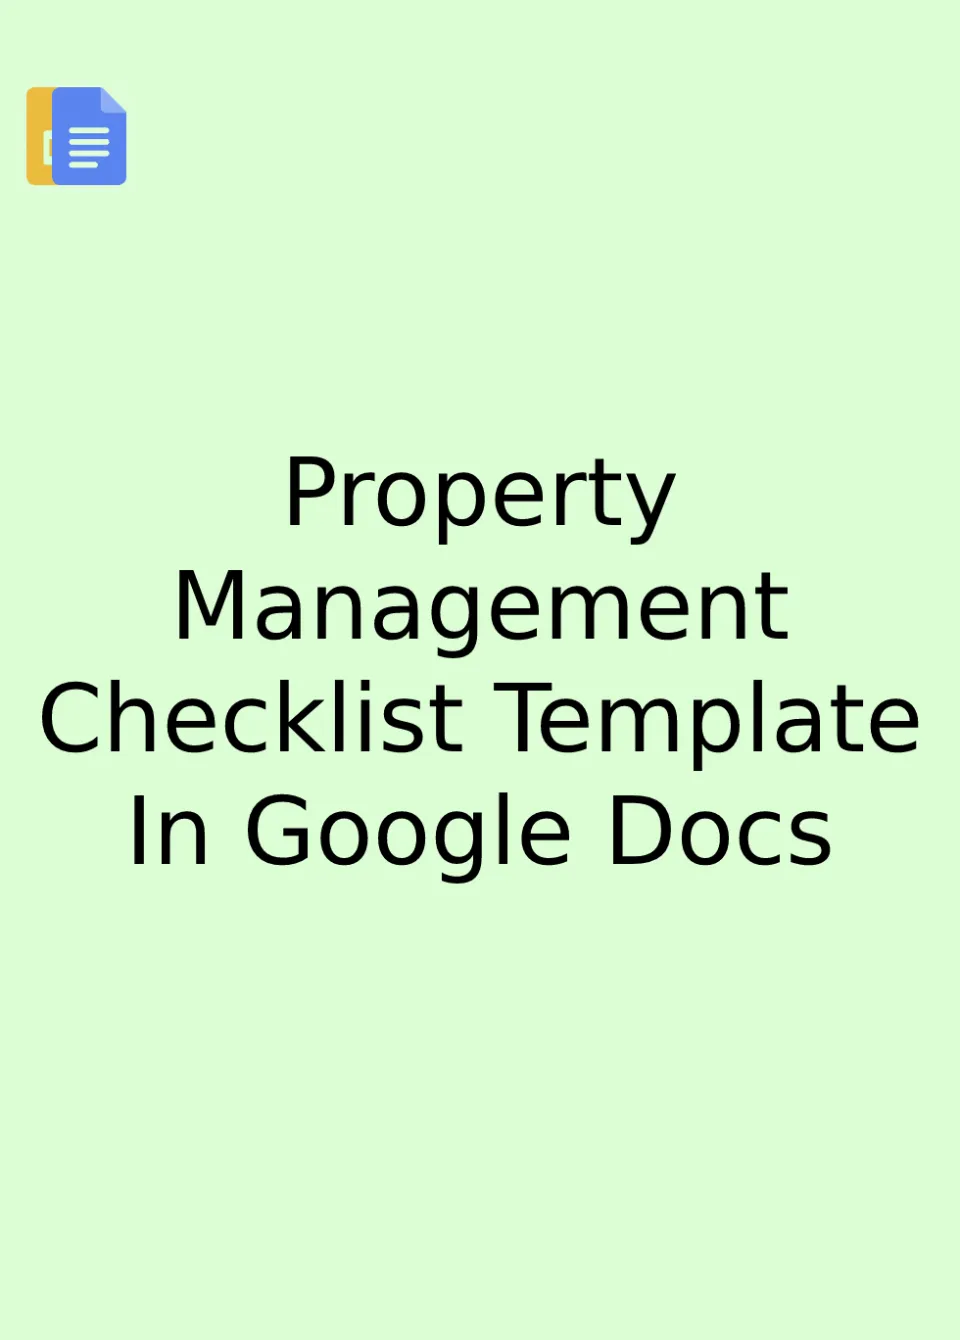 Property Management Checklist Template